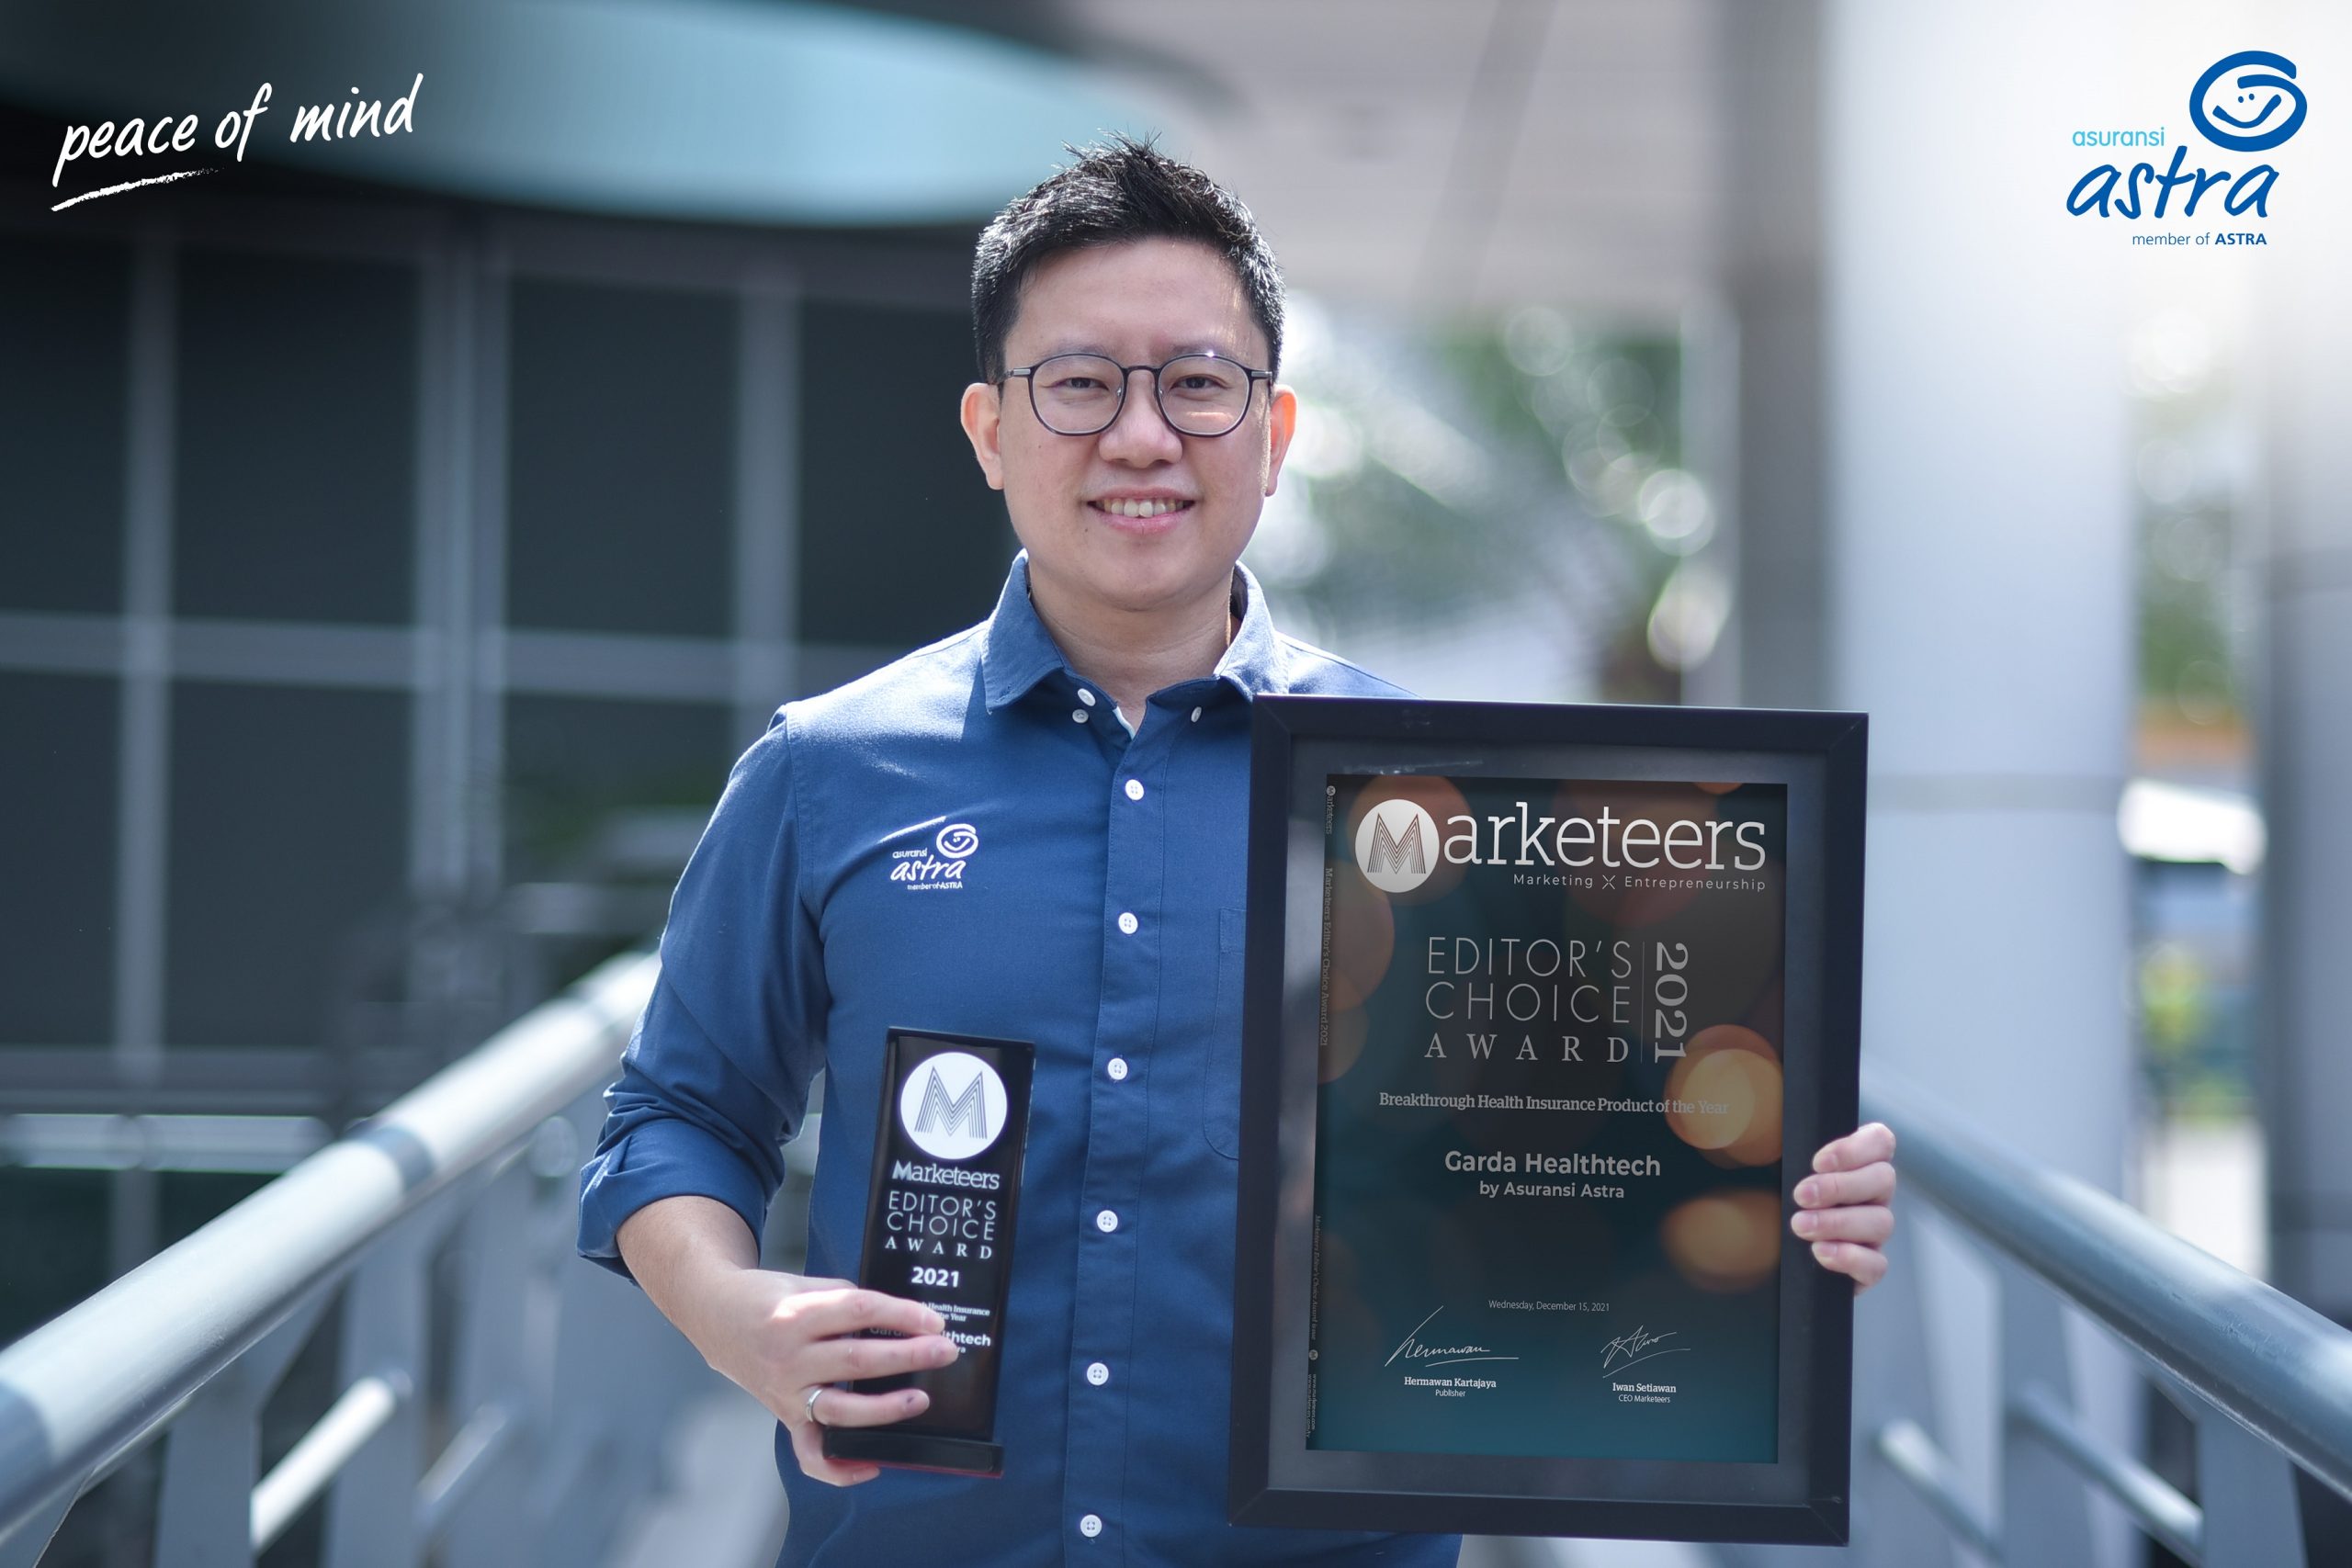 Chief Digital Officer Asuransi Astra, Teddy Suryawan menerima penghargaan Marketeers Editor’s Choice Award 2021